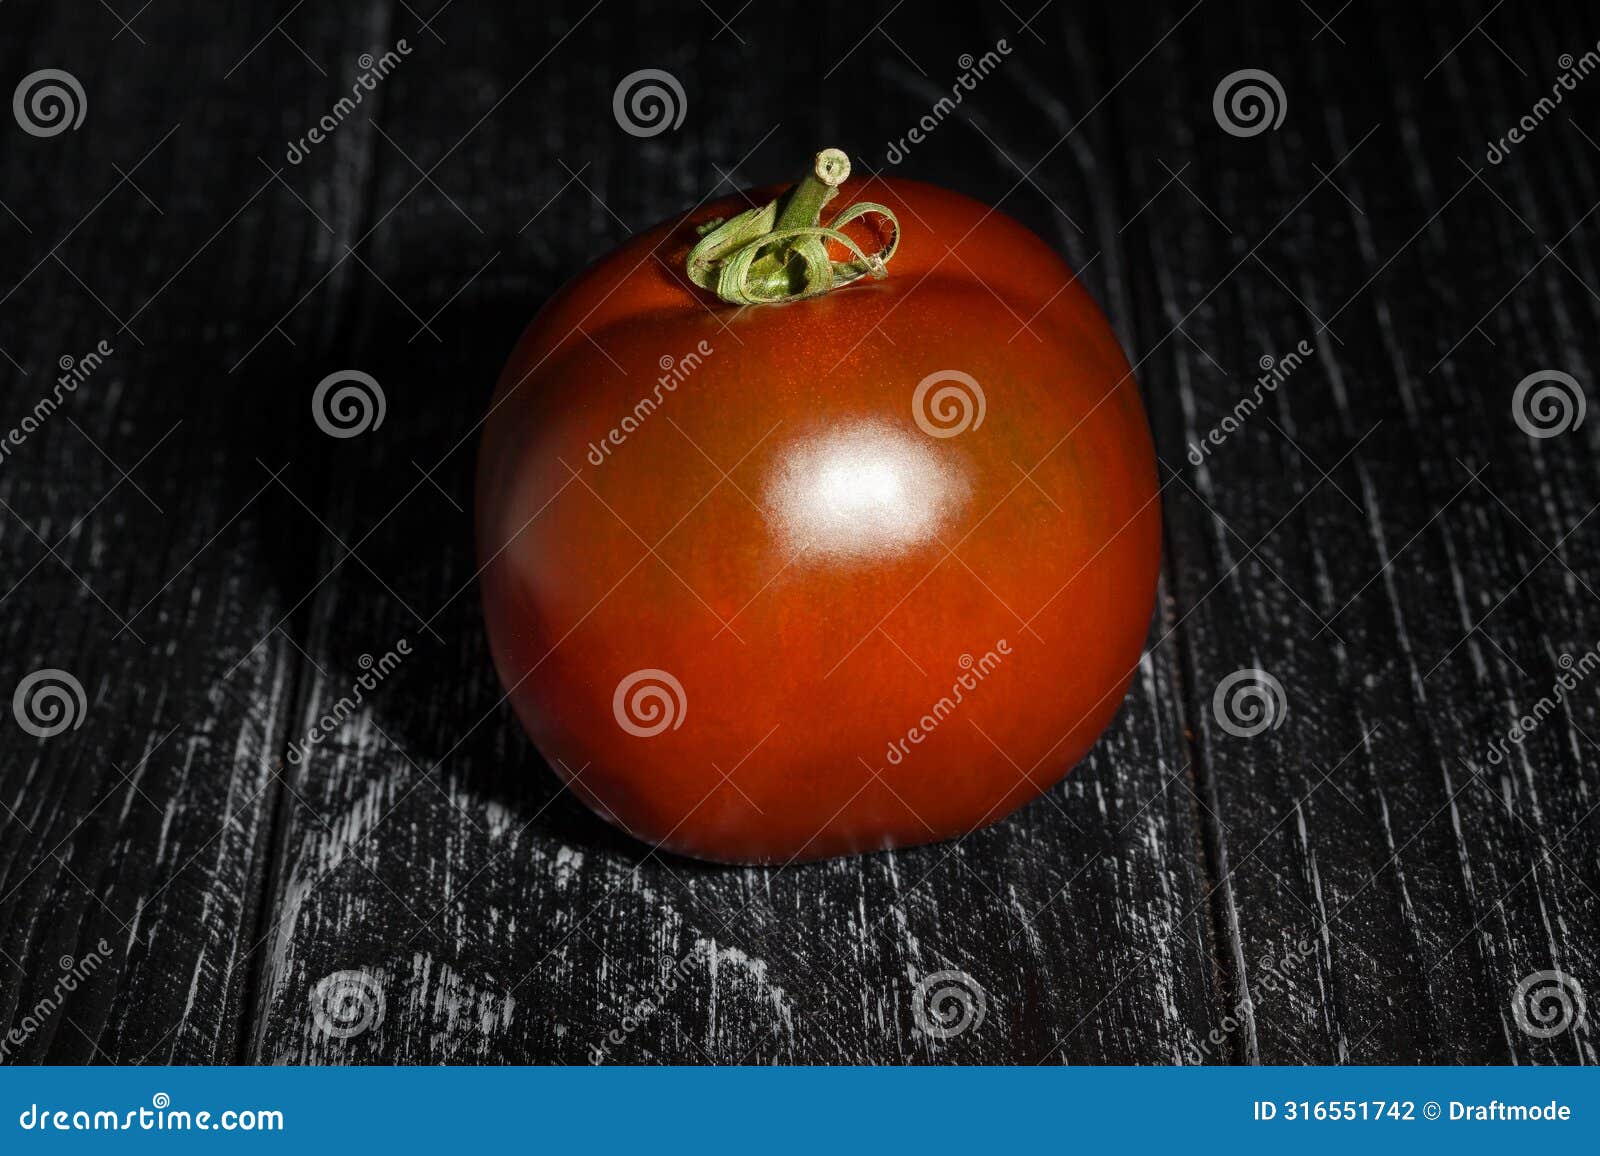 kumato tomato on black wood